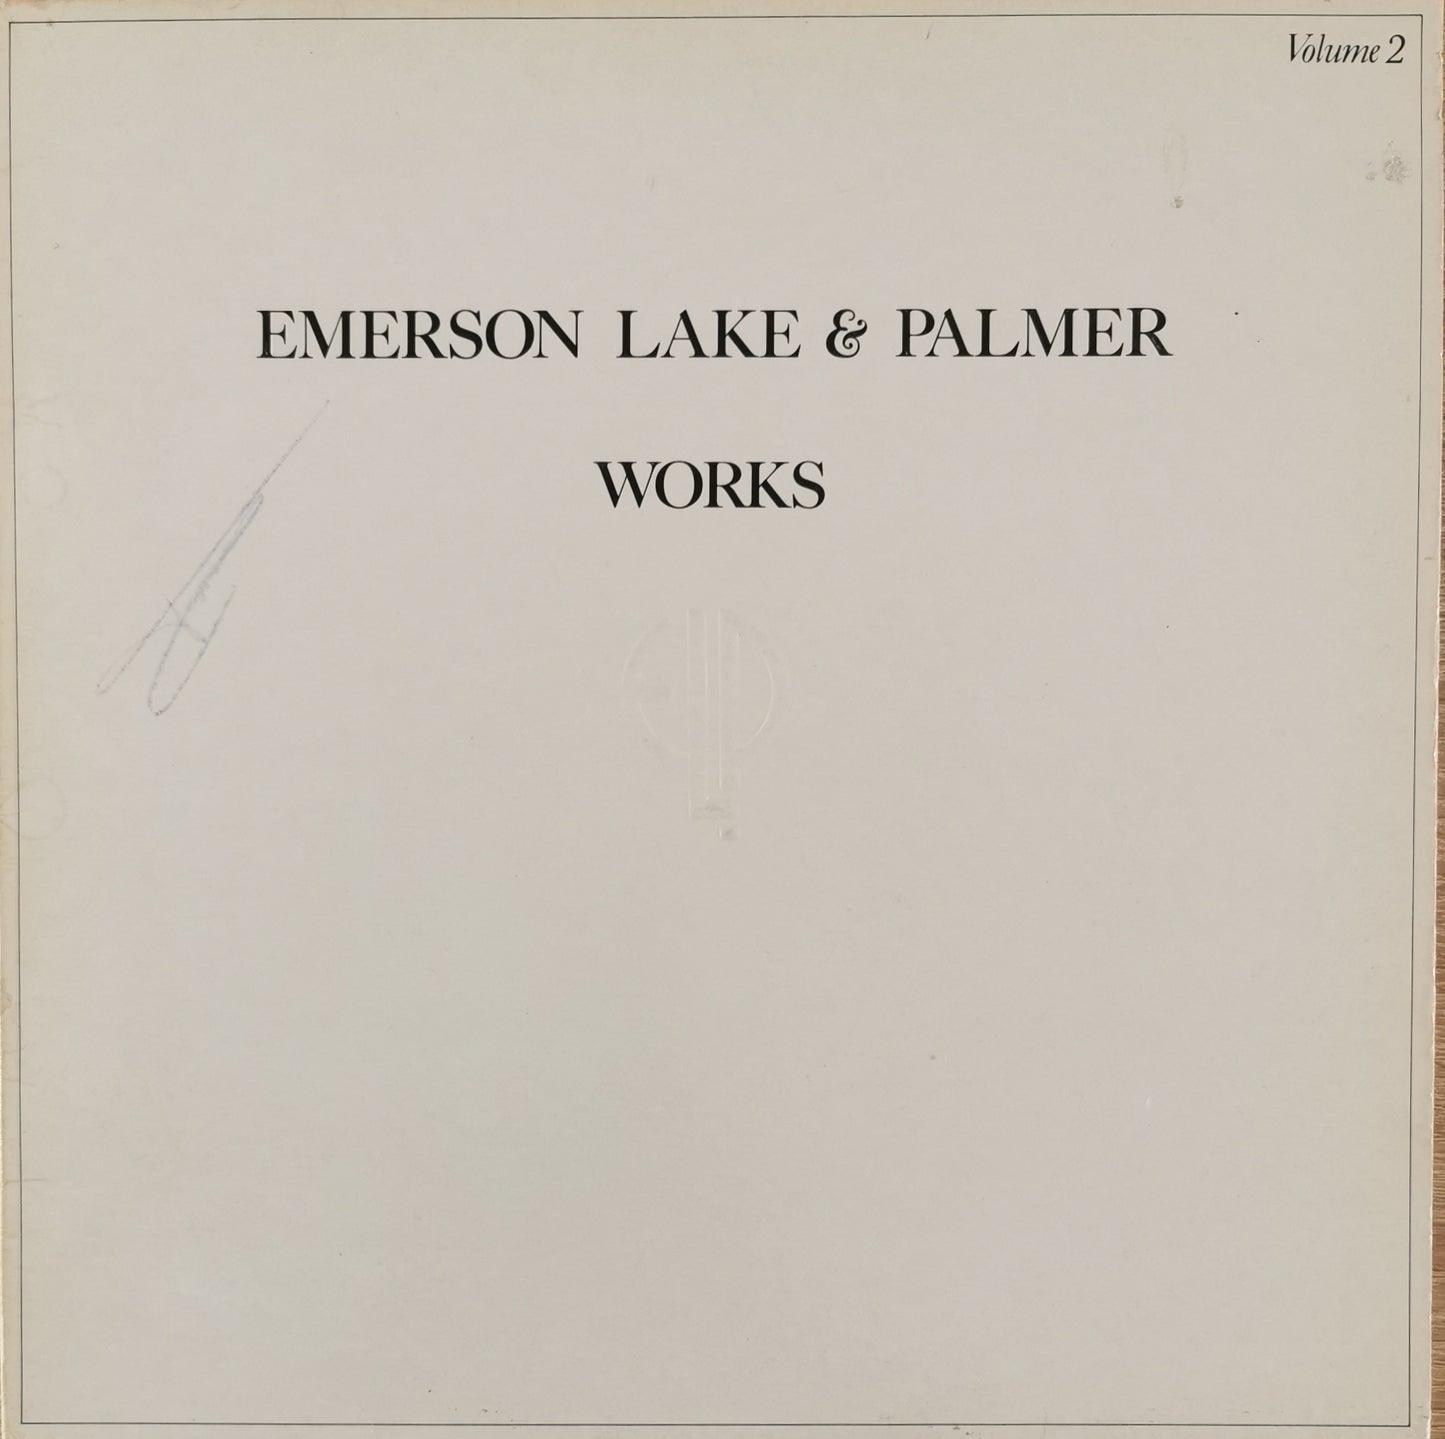 EMERSON LAKE & PALMER - Works Volume 2